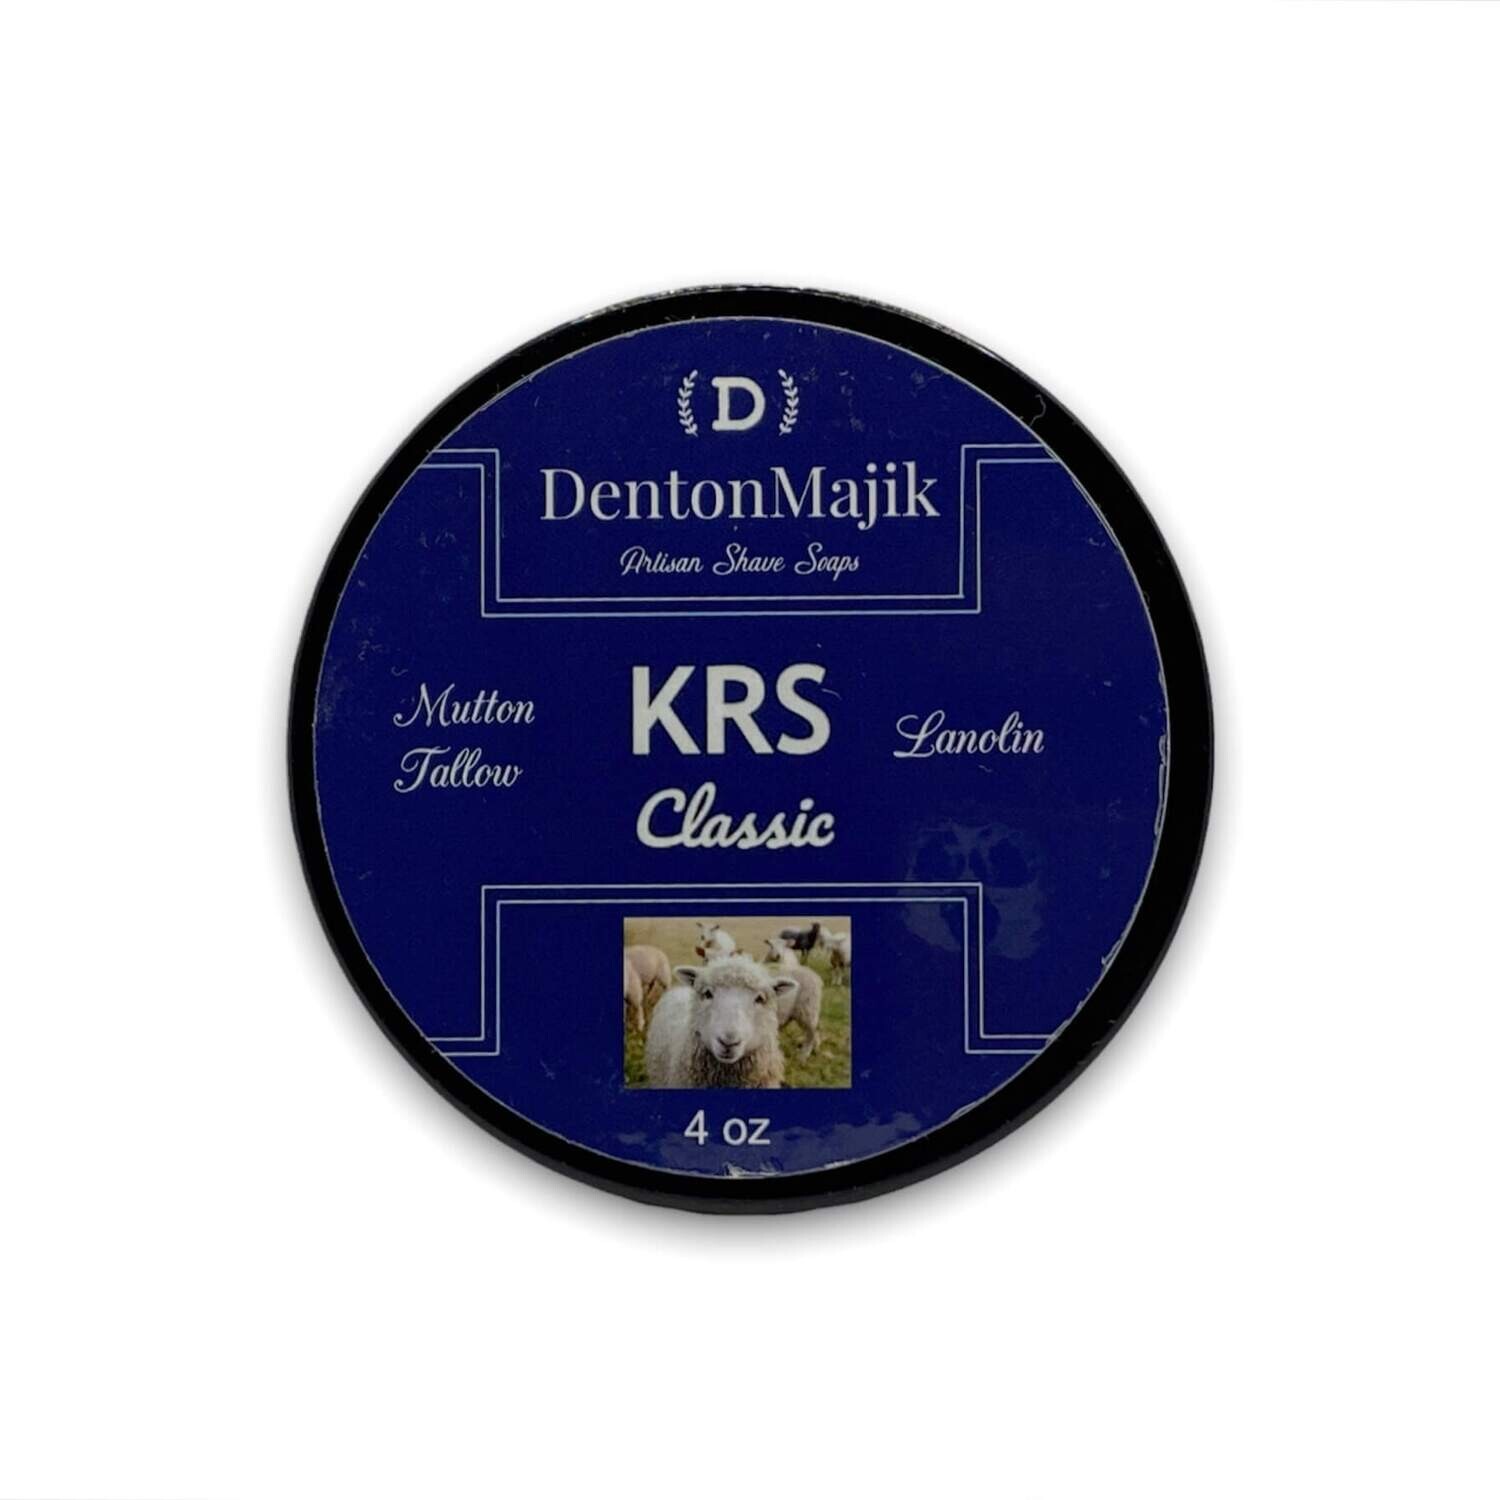 Denton Majik KRS Classic Artisan Shave Soap